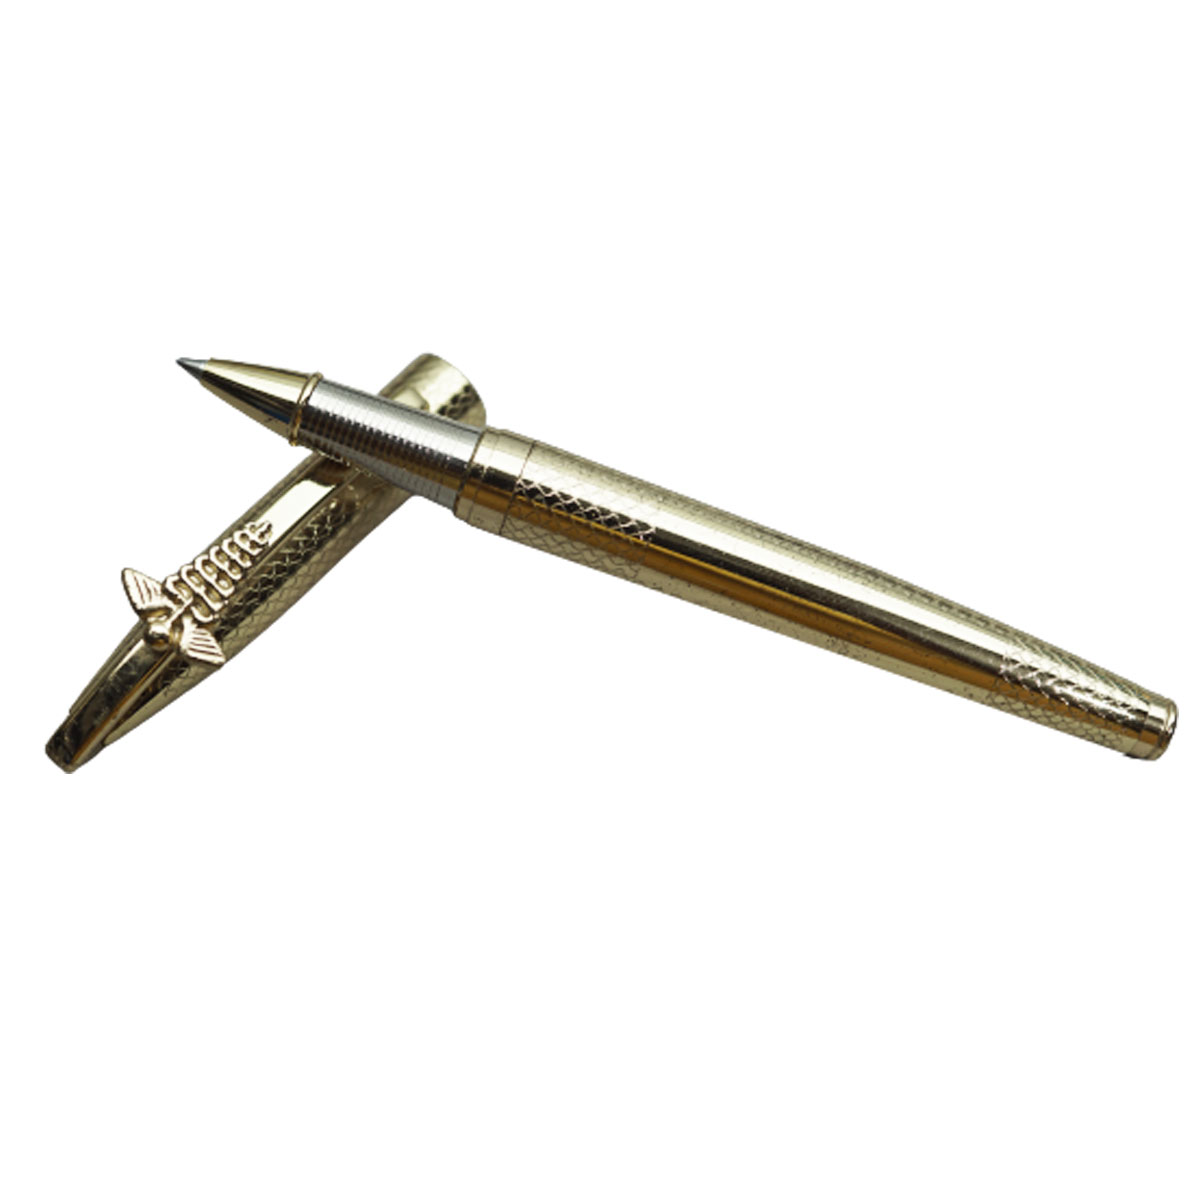 Penhouse.in Doctor Clip Gold body andCap Roller Ball Pen Model: 18299